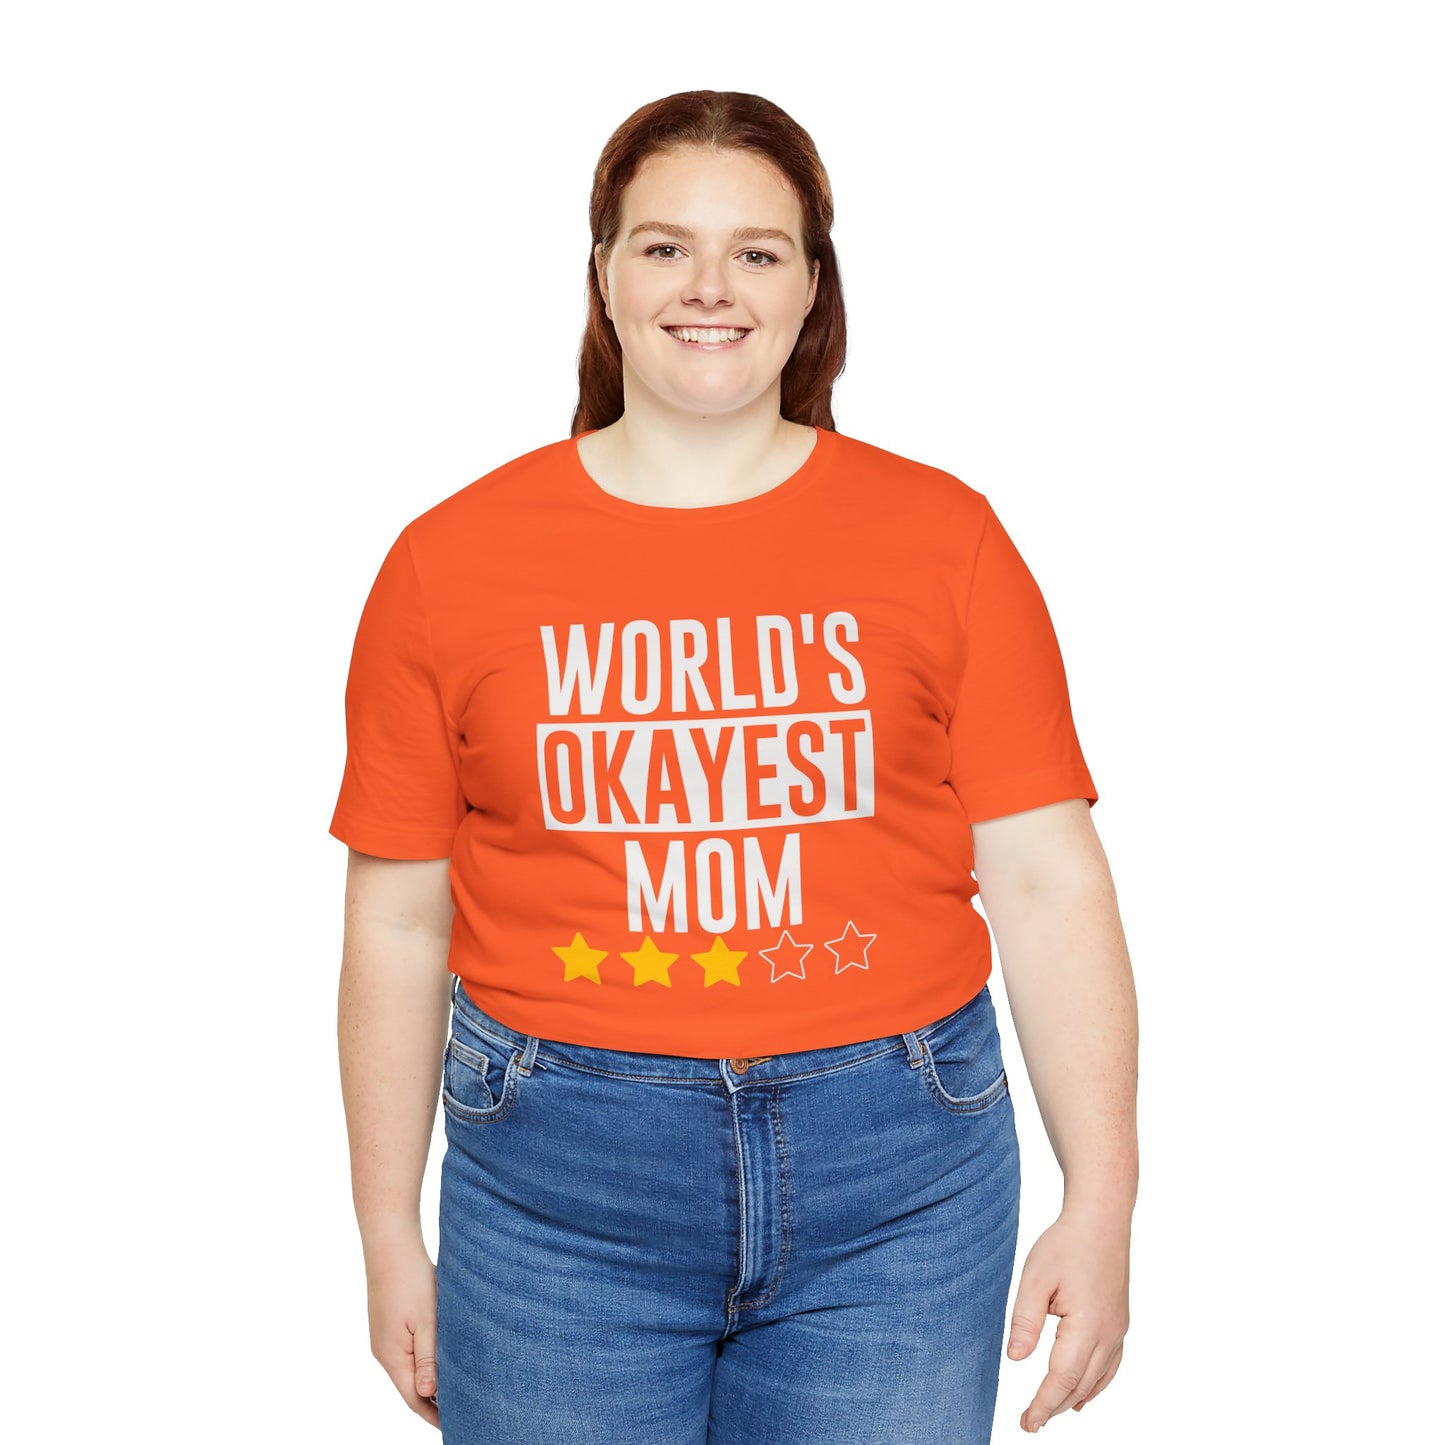 Worlds Okayest Mom - Unisex Jersey Short Sleeve Tee